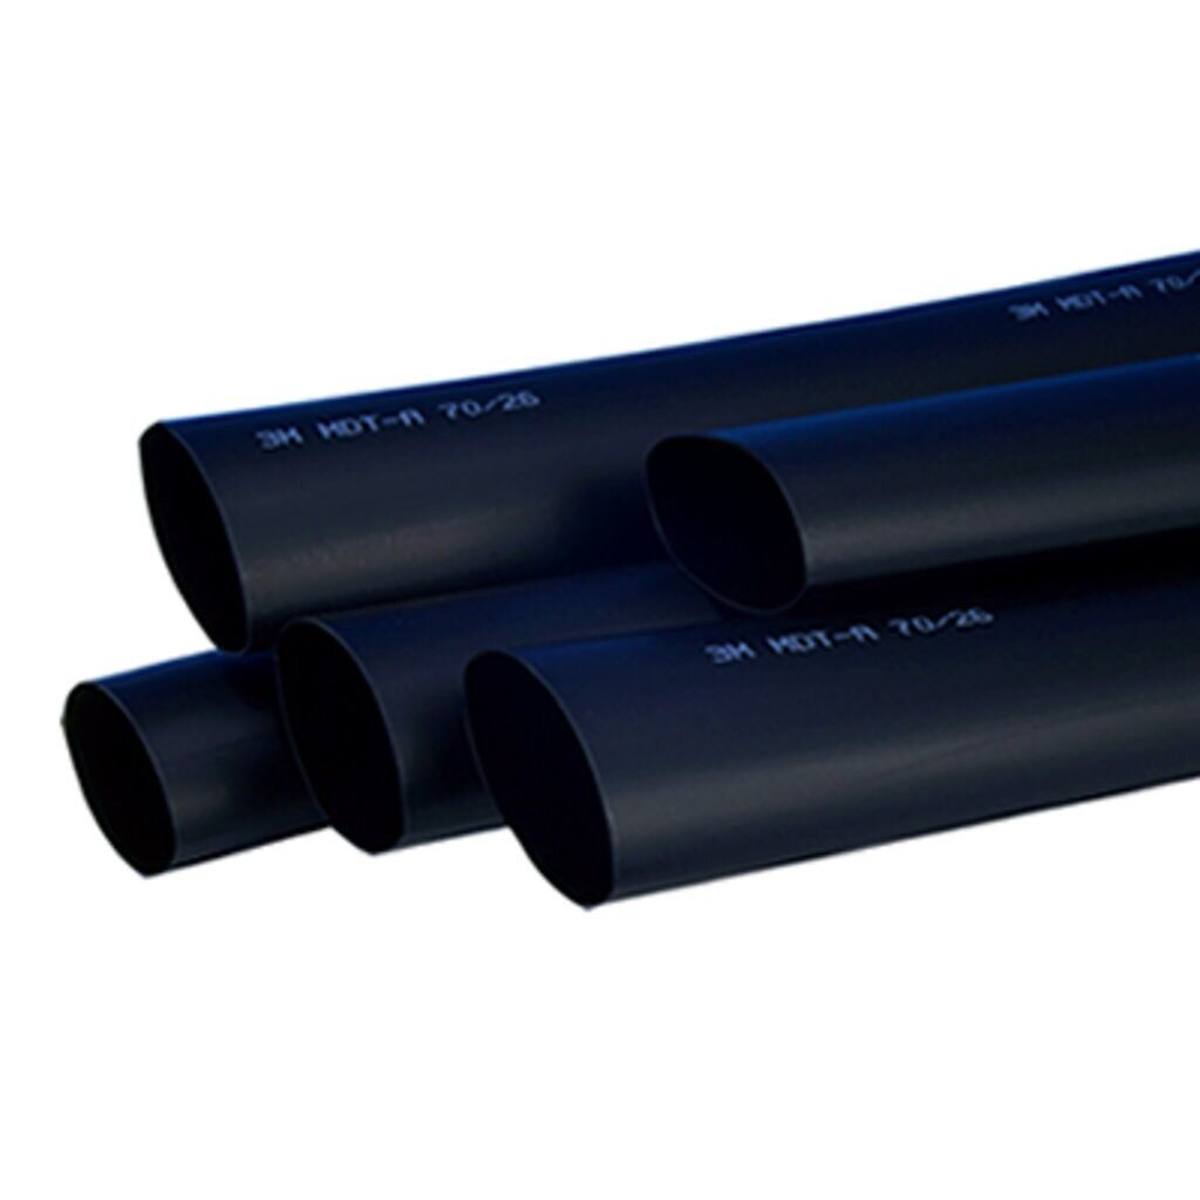 3M MDT-A Medium-wall heat-shrink tubing with adhesive, black, 120/40 mm, 1 m